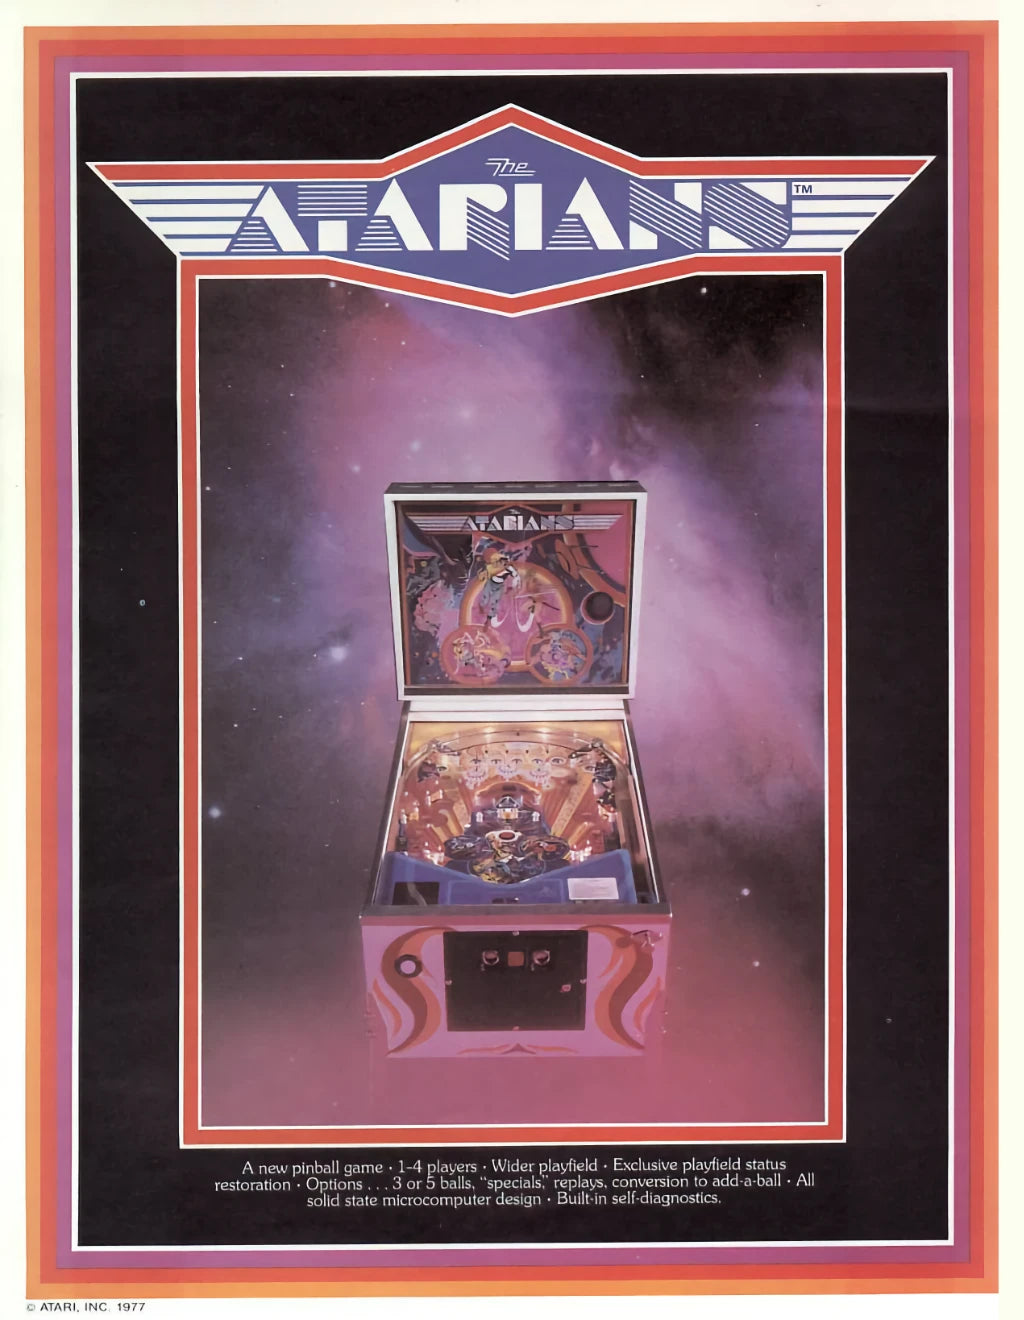 Pinball Magic of the `70s – The Atarians